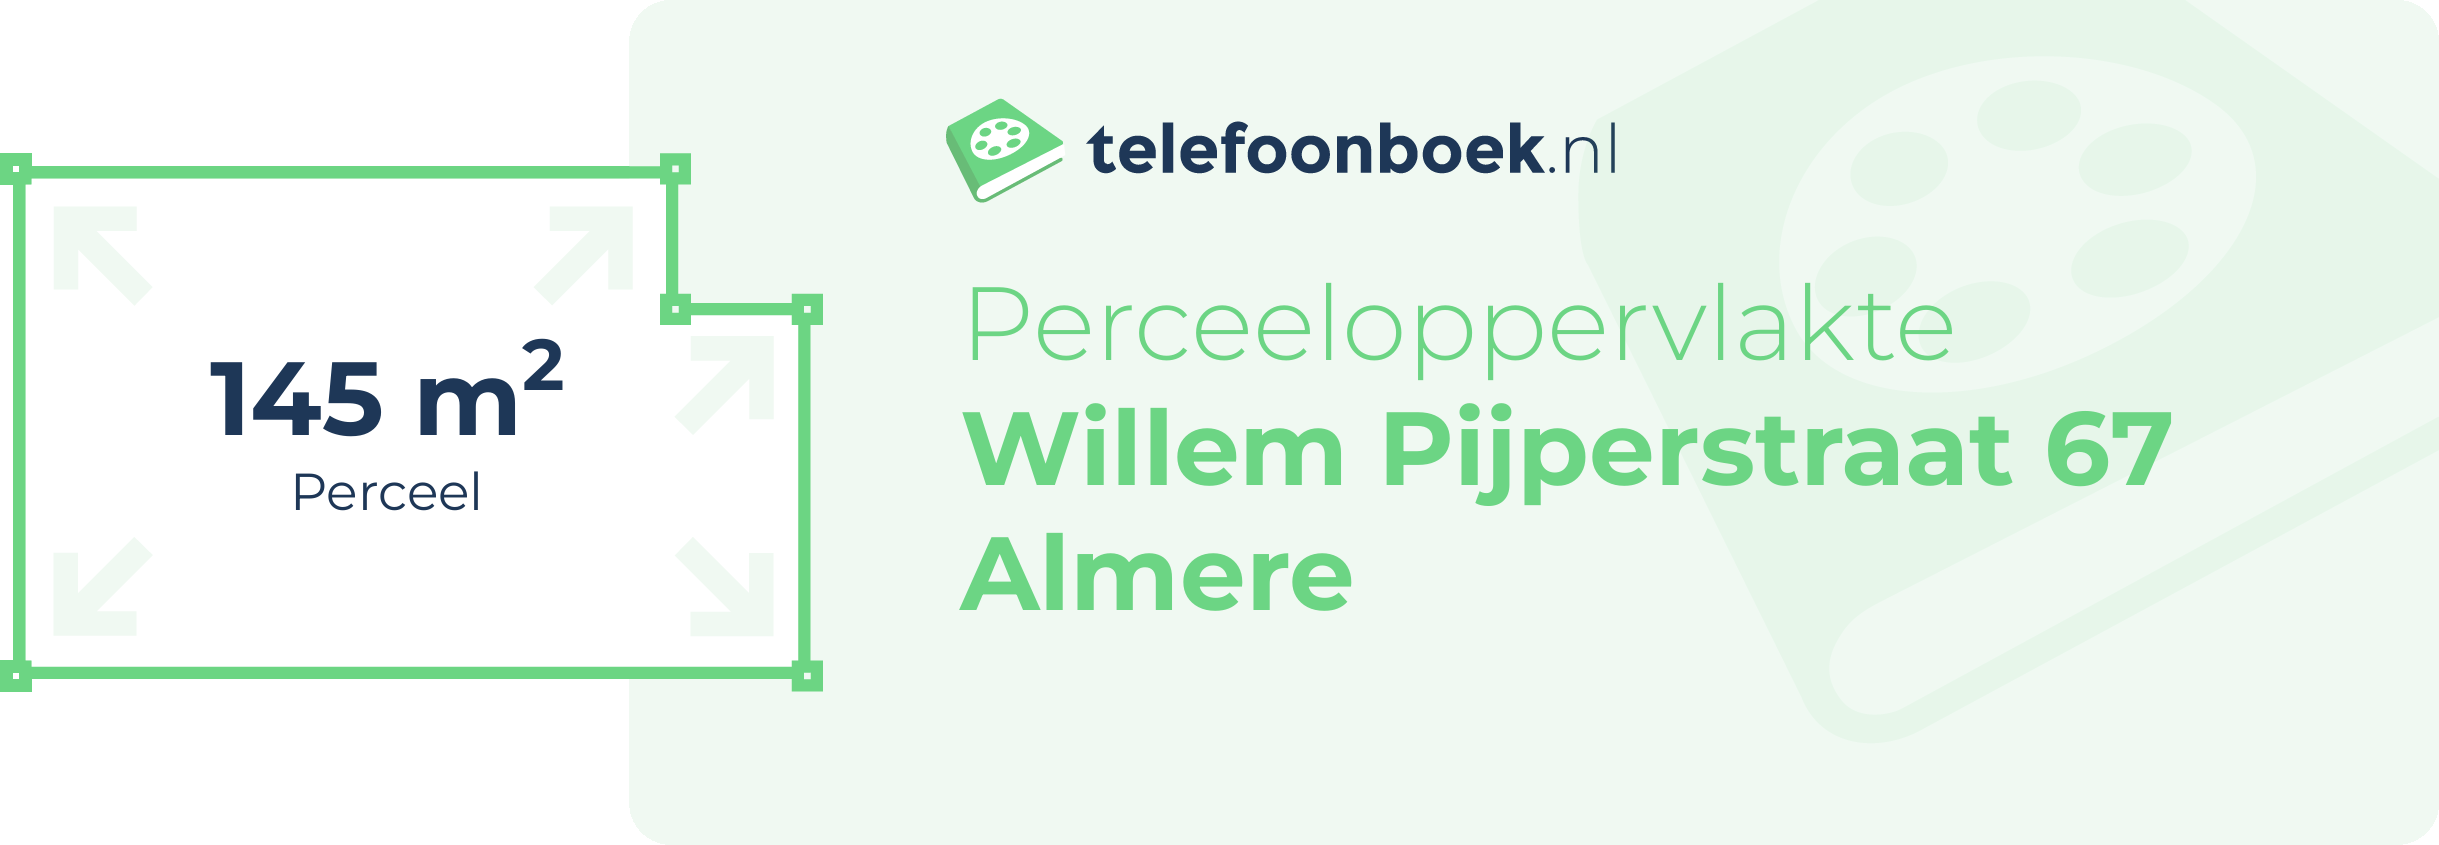 Perceeloppervlakte Willem Pijperstraat 67 Almere